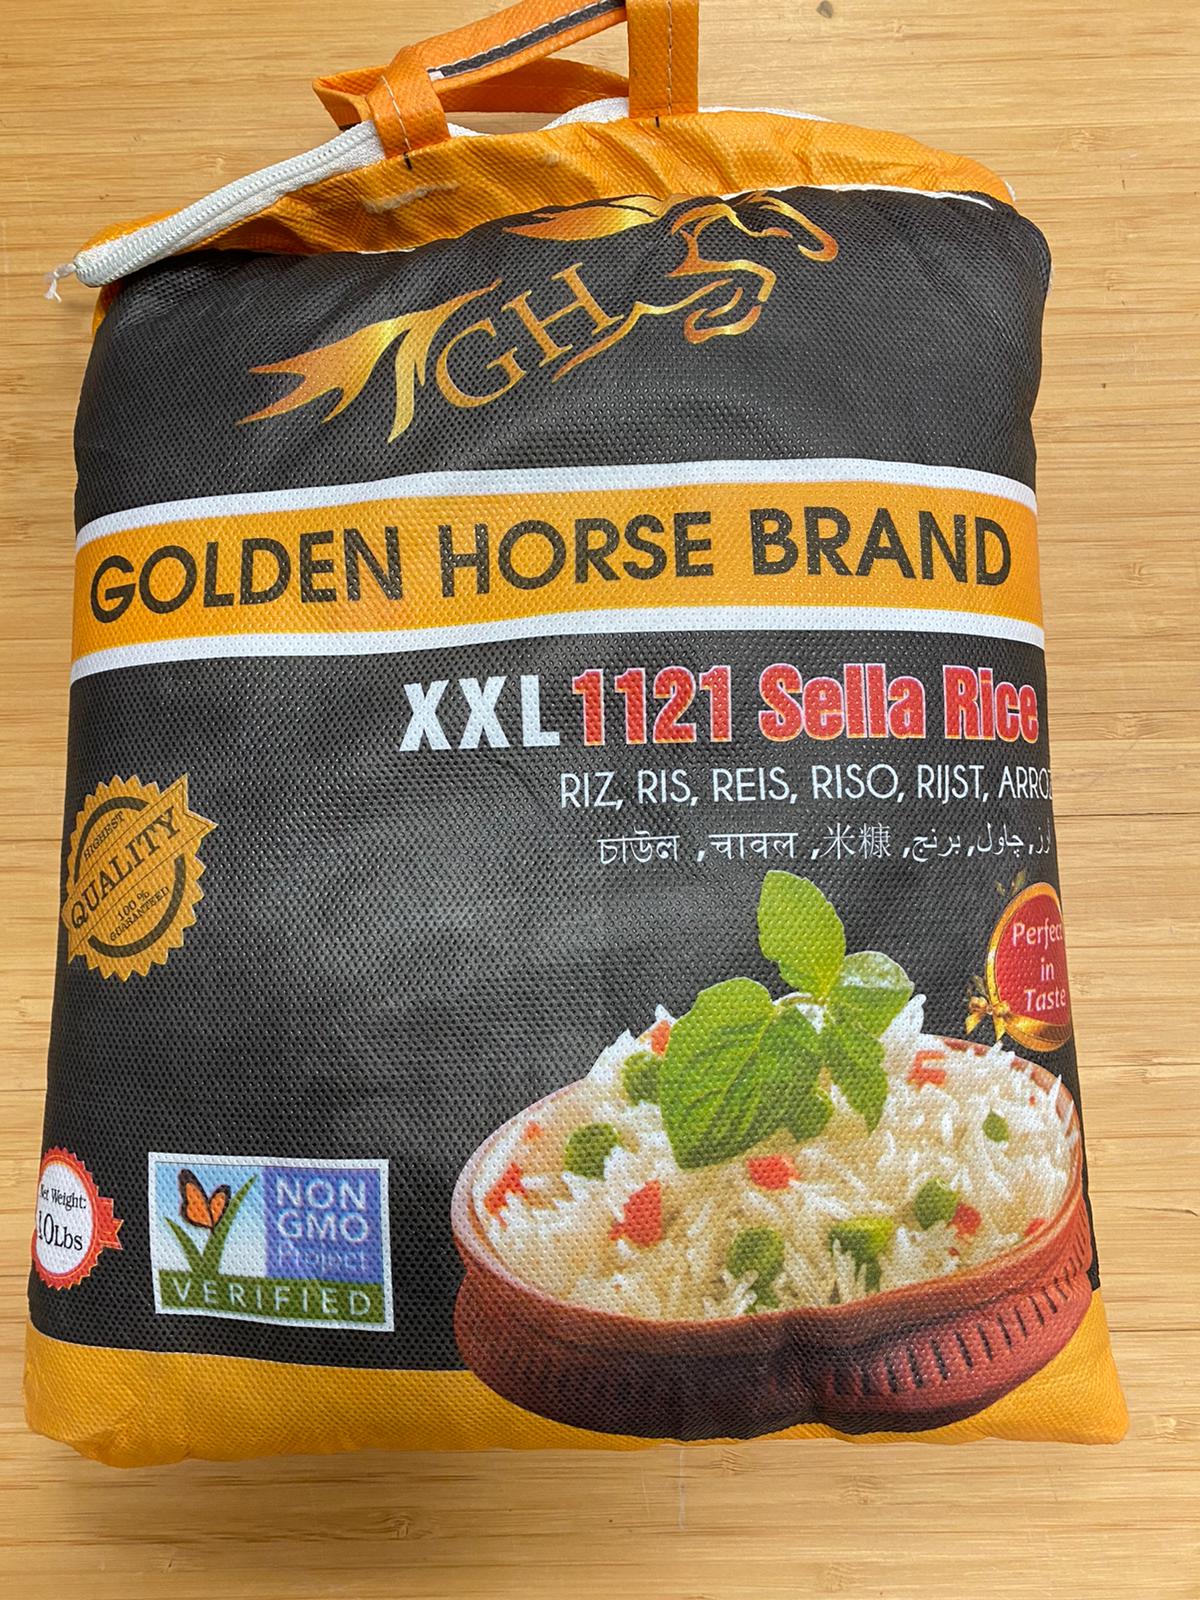 Golden Horse Sella Rice